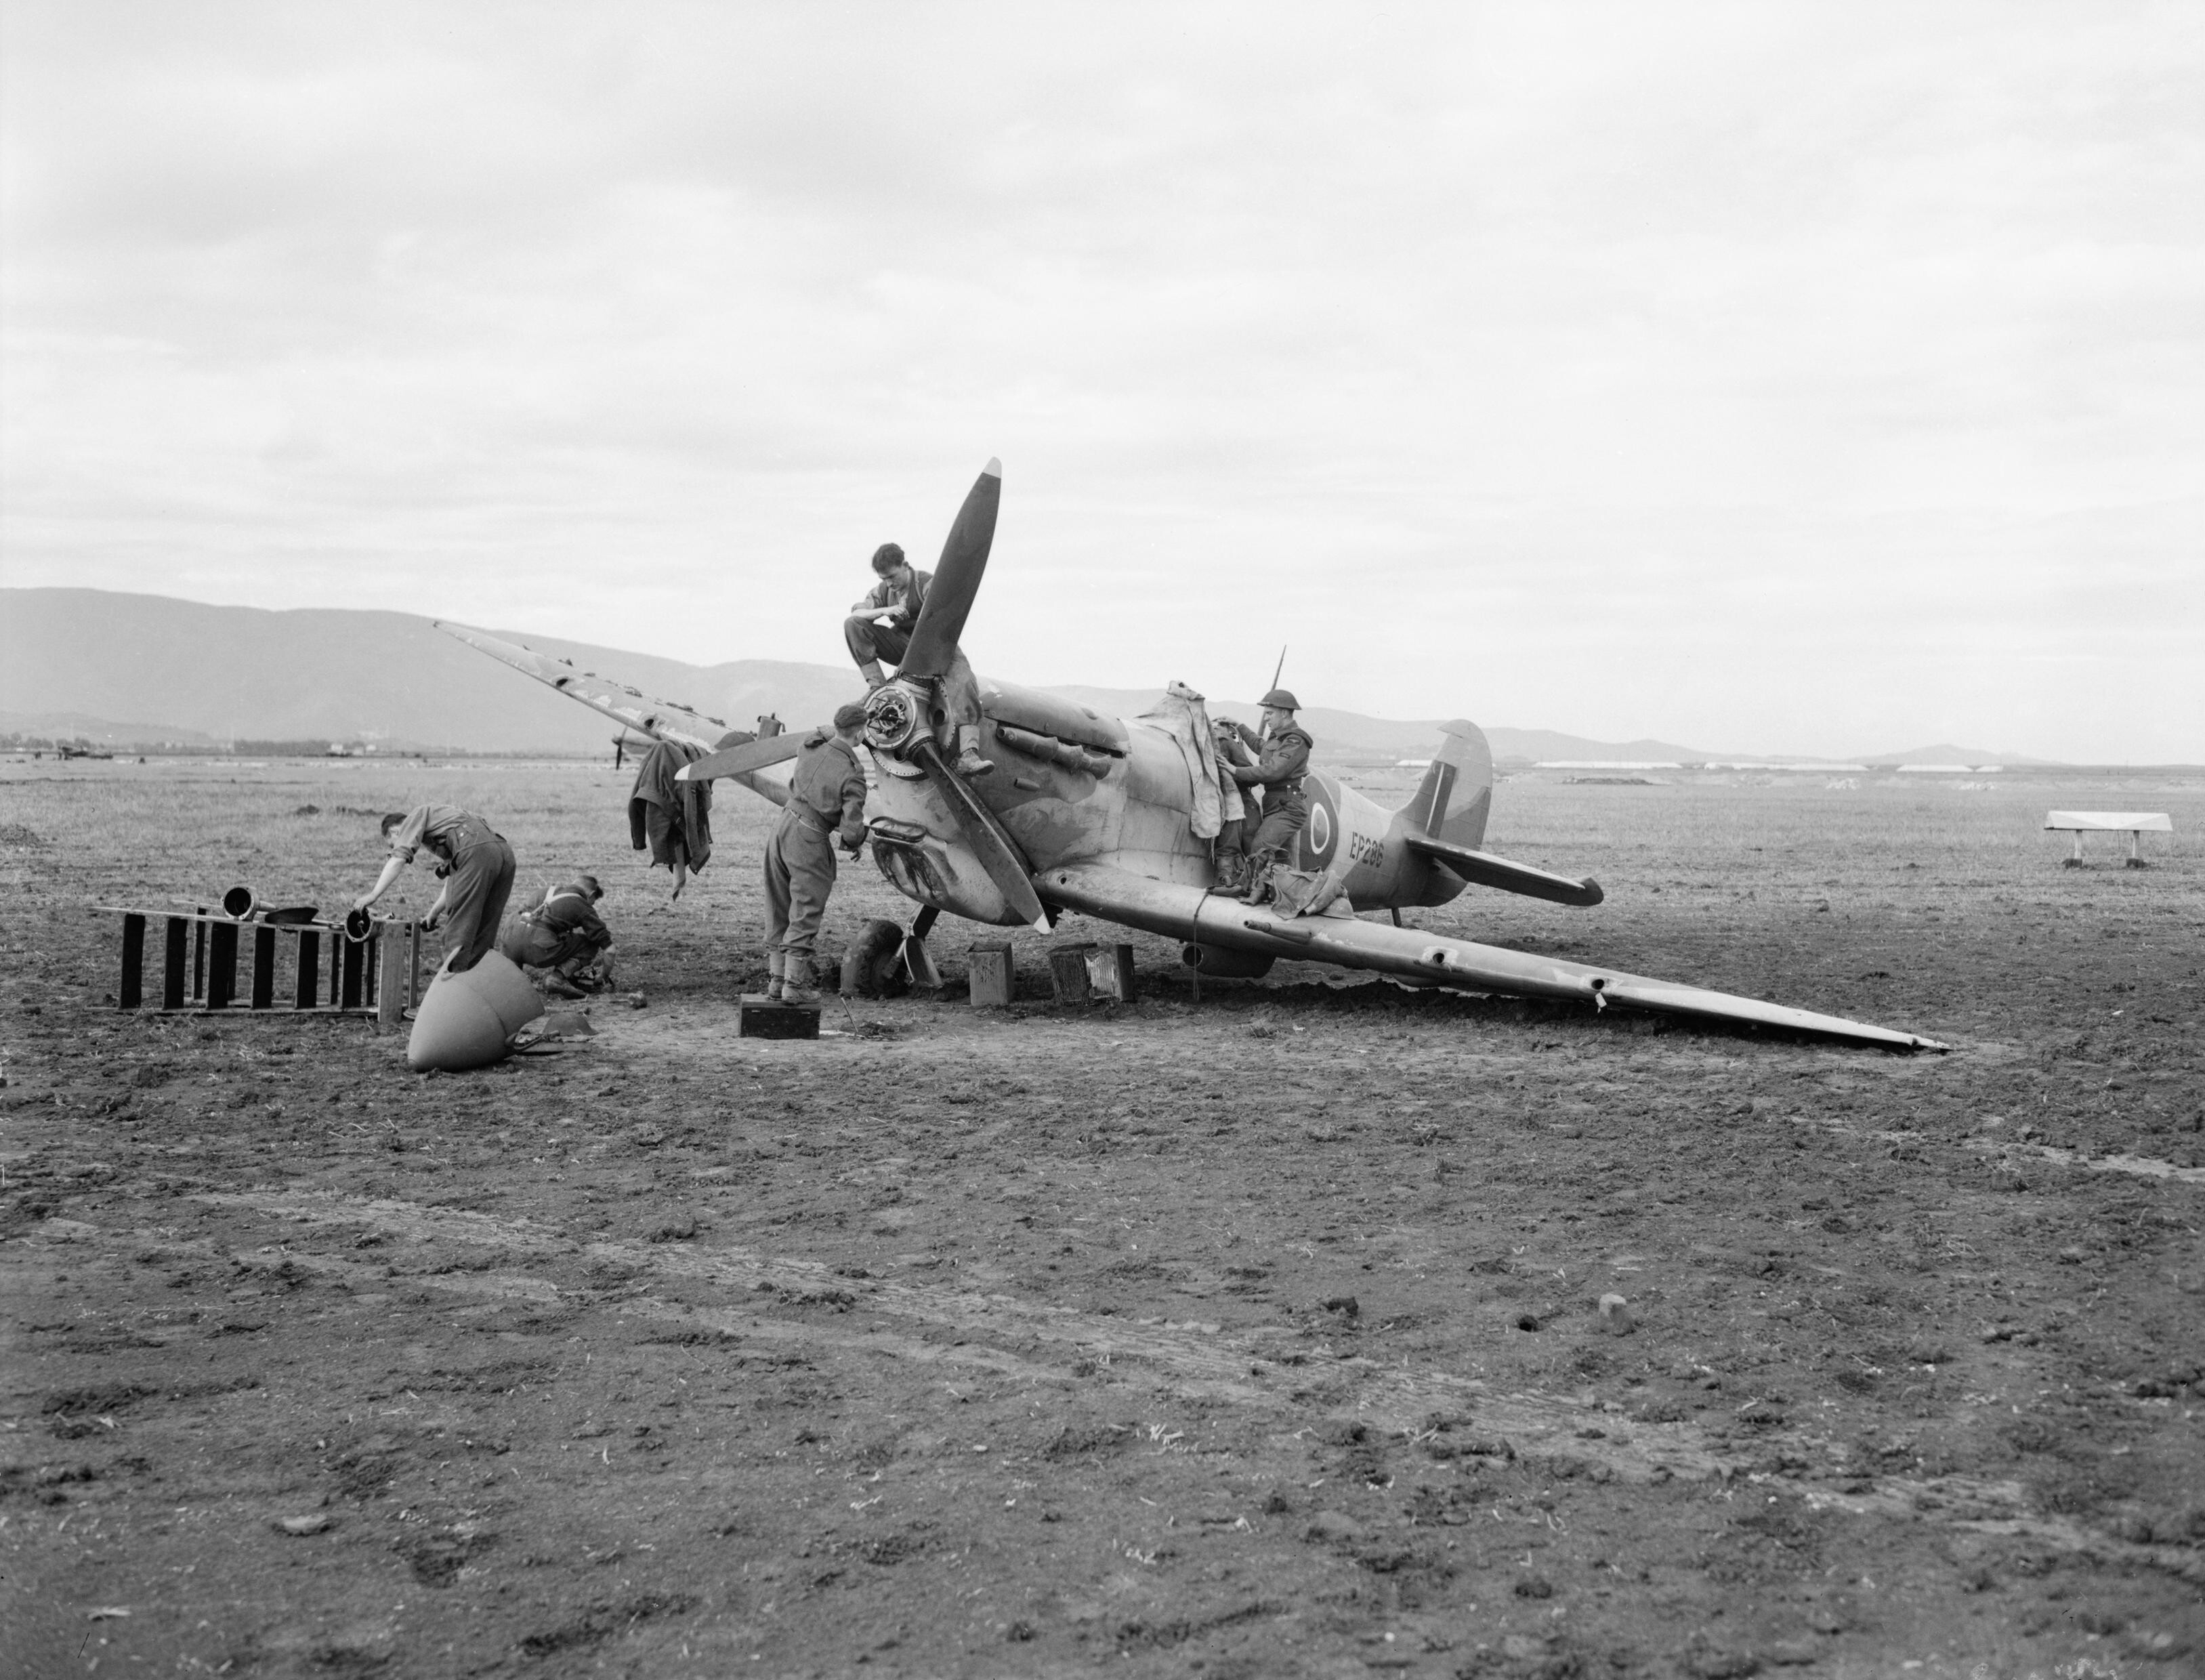 A Royal Air Force Spitfire that suffered landing gear failure upon landing near Bone, Algeria.